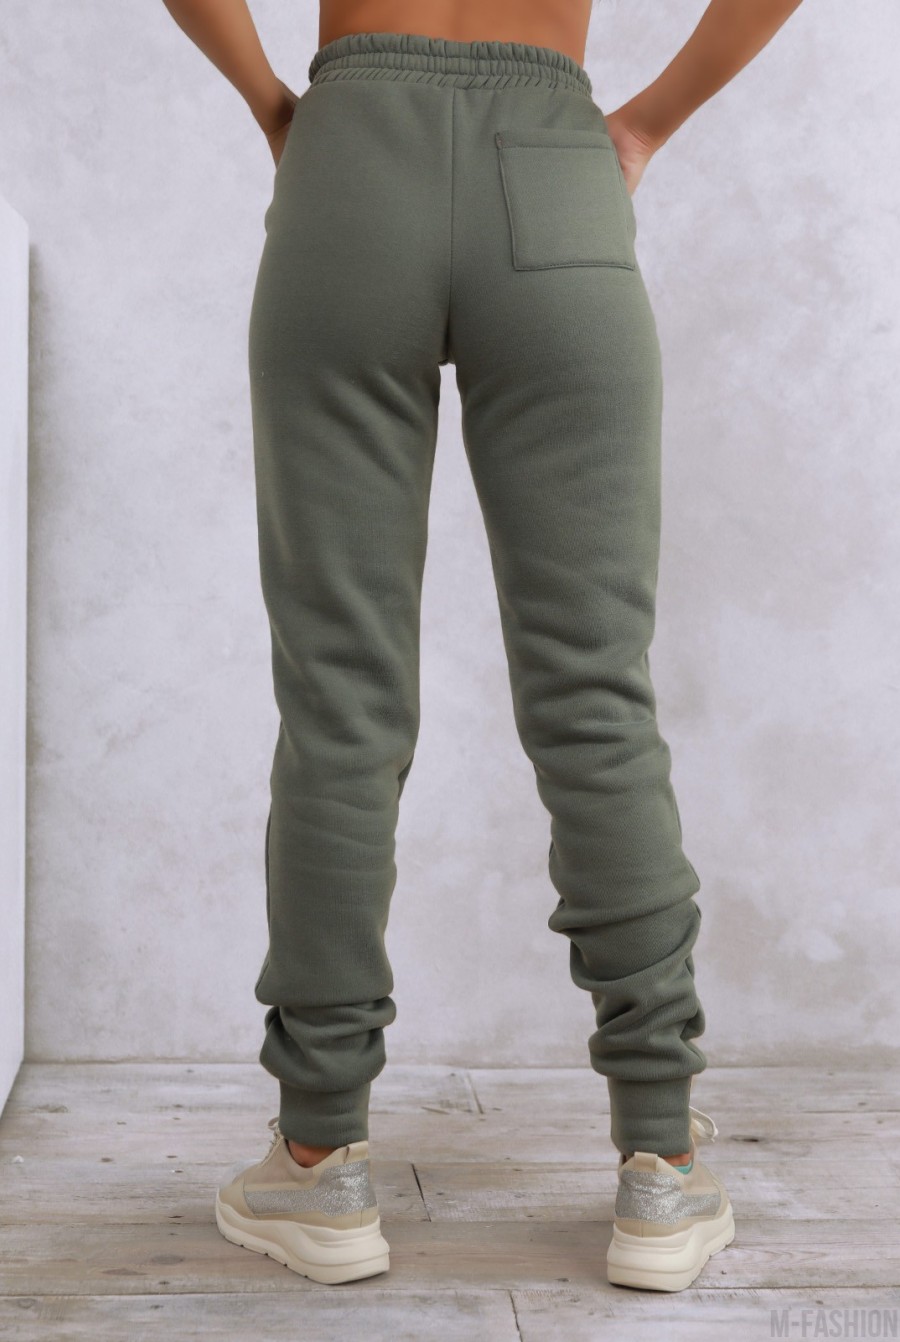 Теплые штаны цвета хаки с нашивками на манжетах- Фото 3